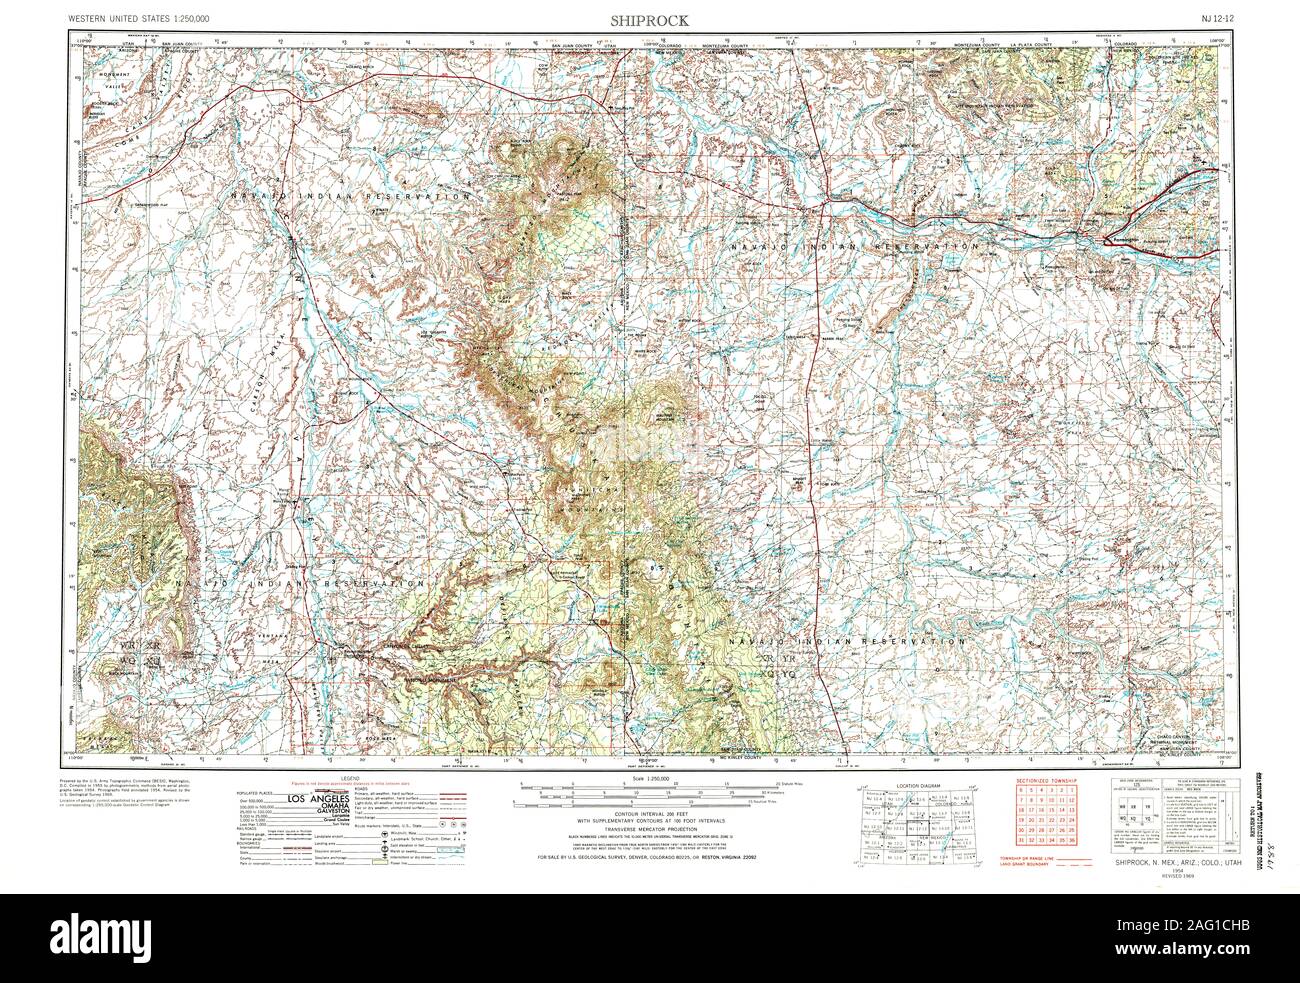 Usgs Topo Map New Mexico Nm Shiprock 194437 1954 250000 Restoration 2AG1CHB 